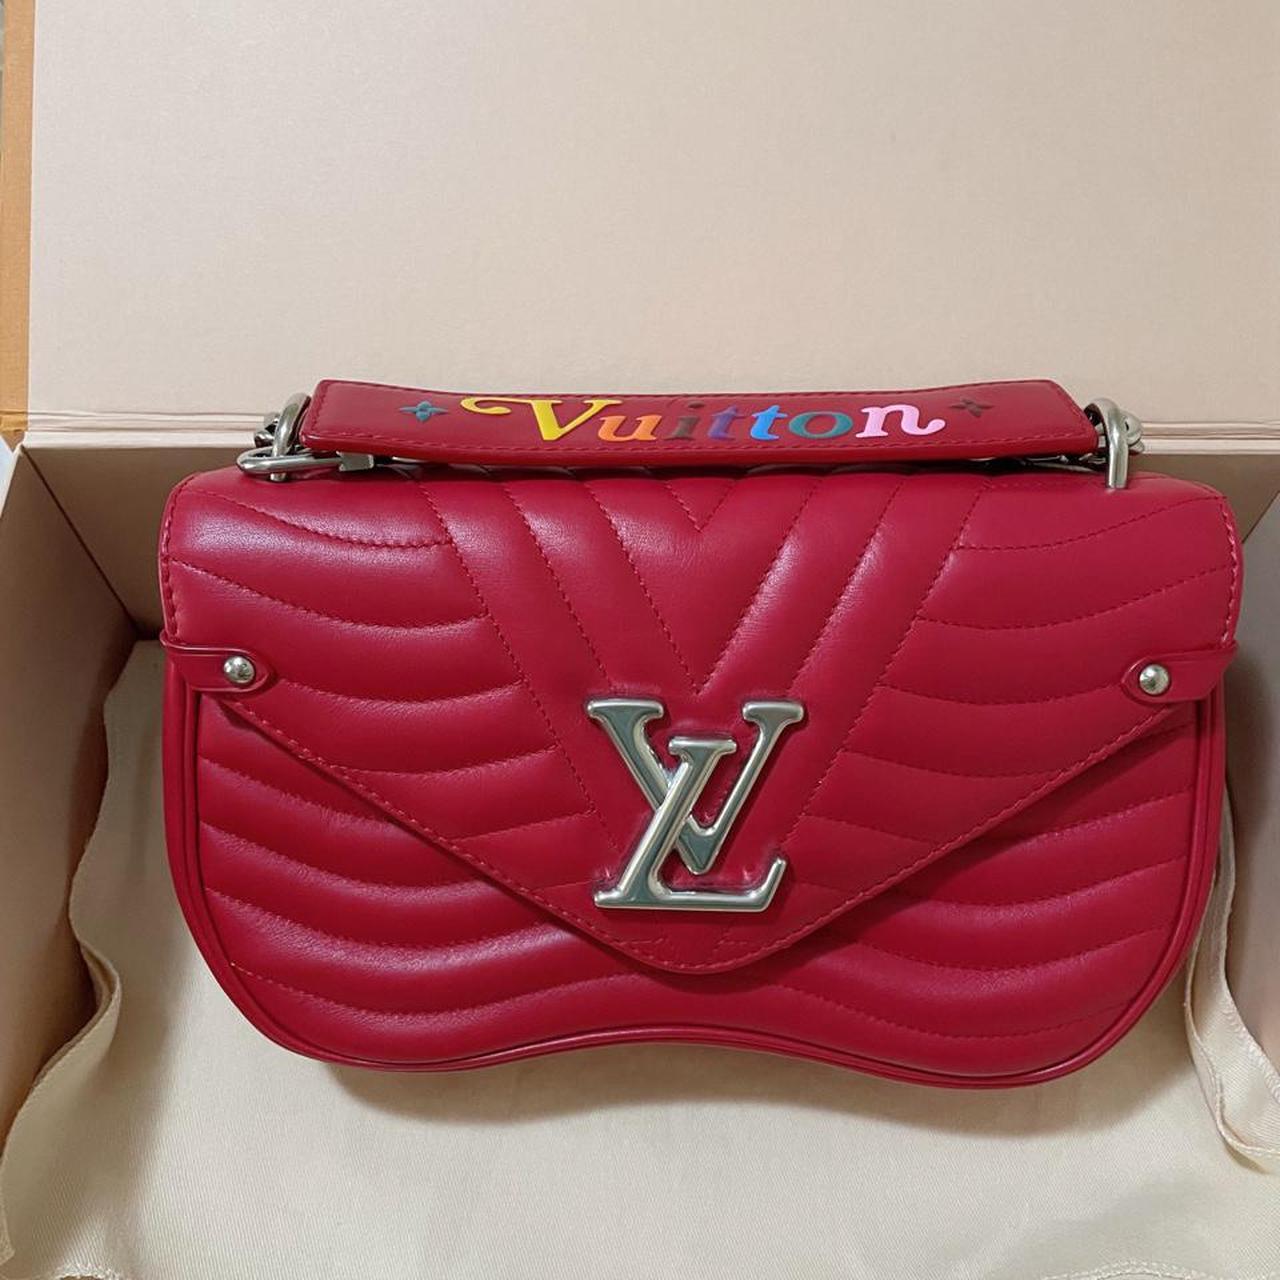 Louis Vuitton, Bags, Louis Vuitton New Wave Pm Red